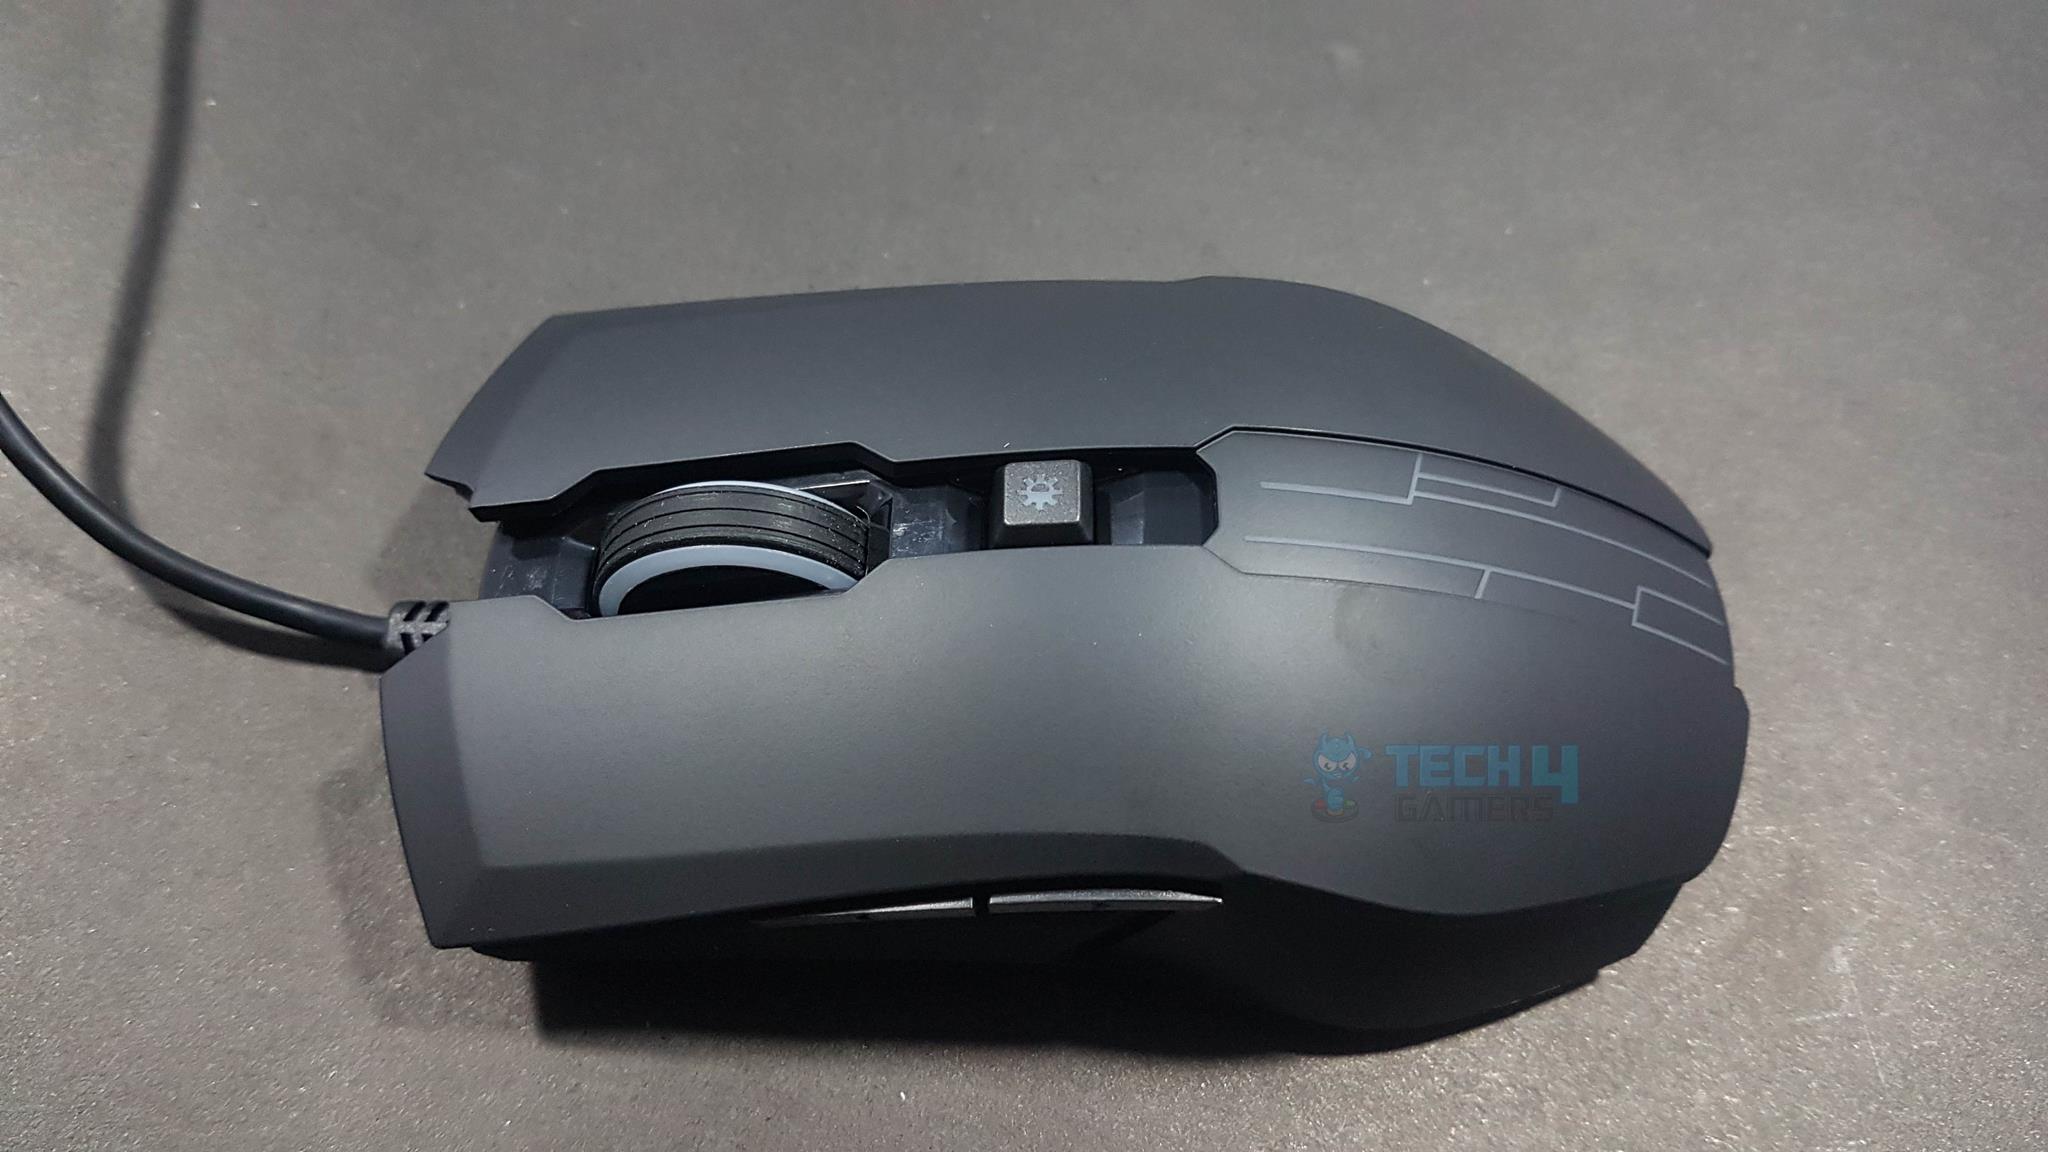 cooler master keyboard mouse 